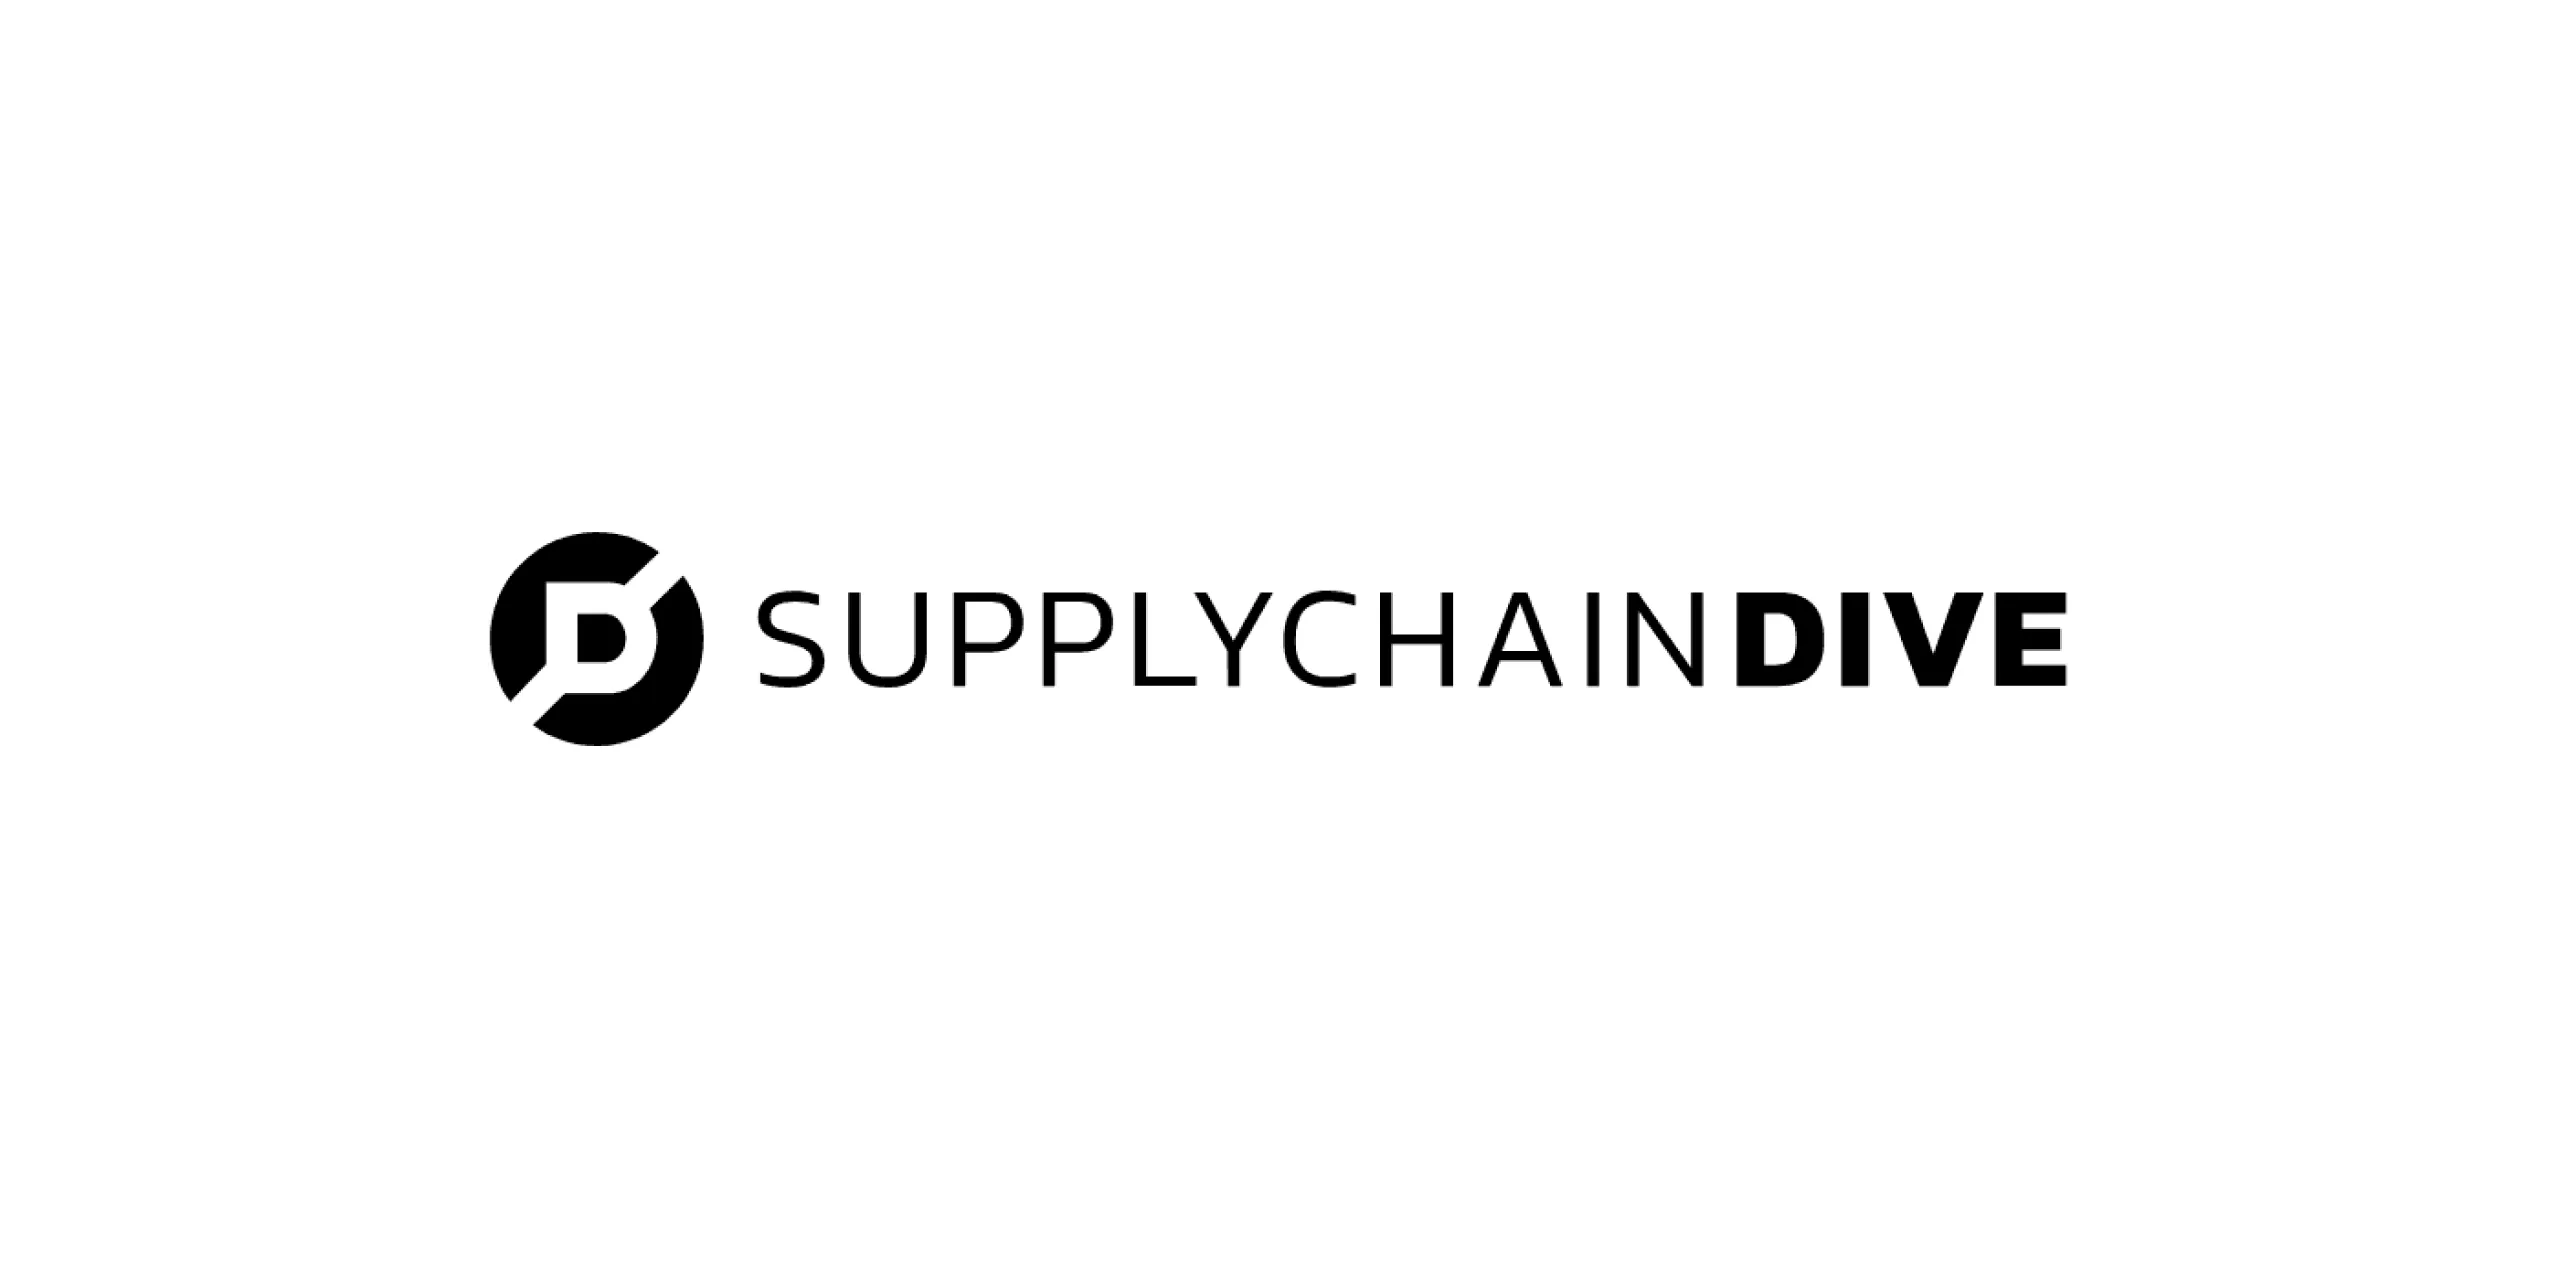 supply chain dive logo